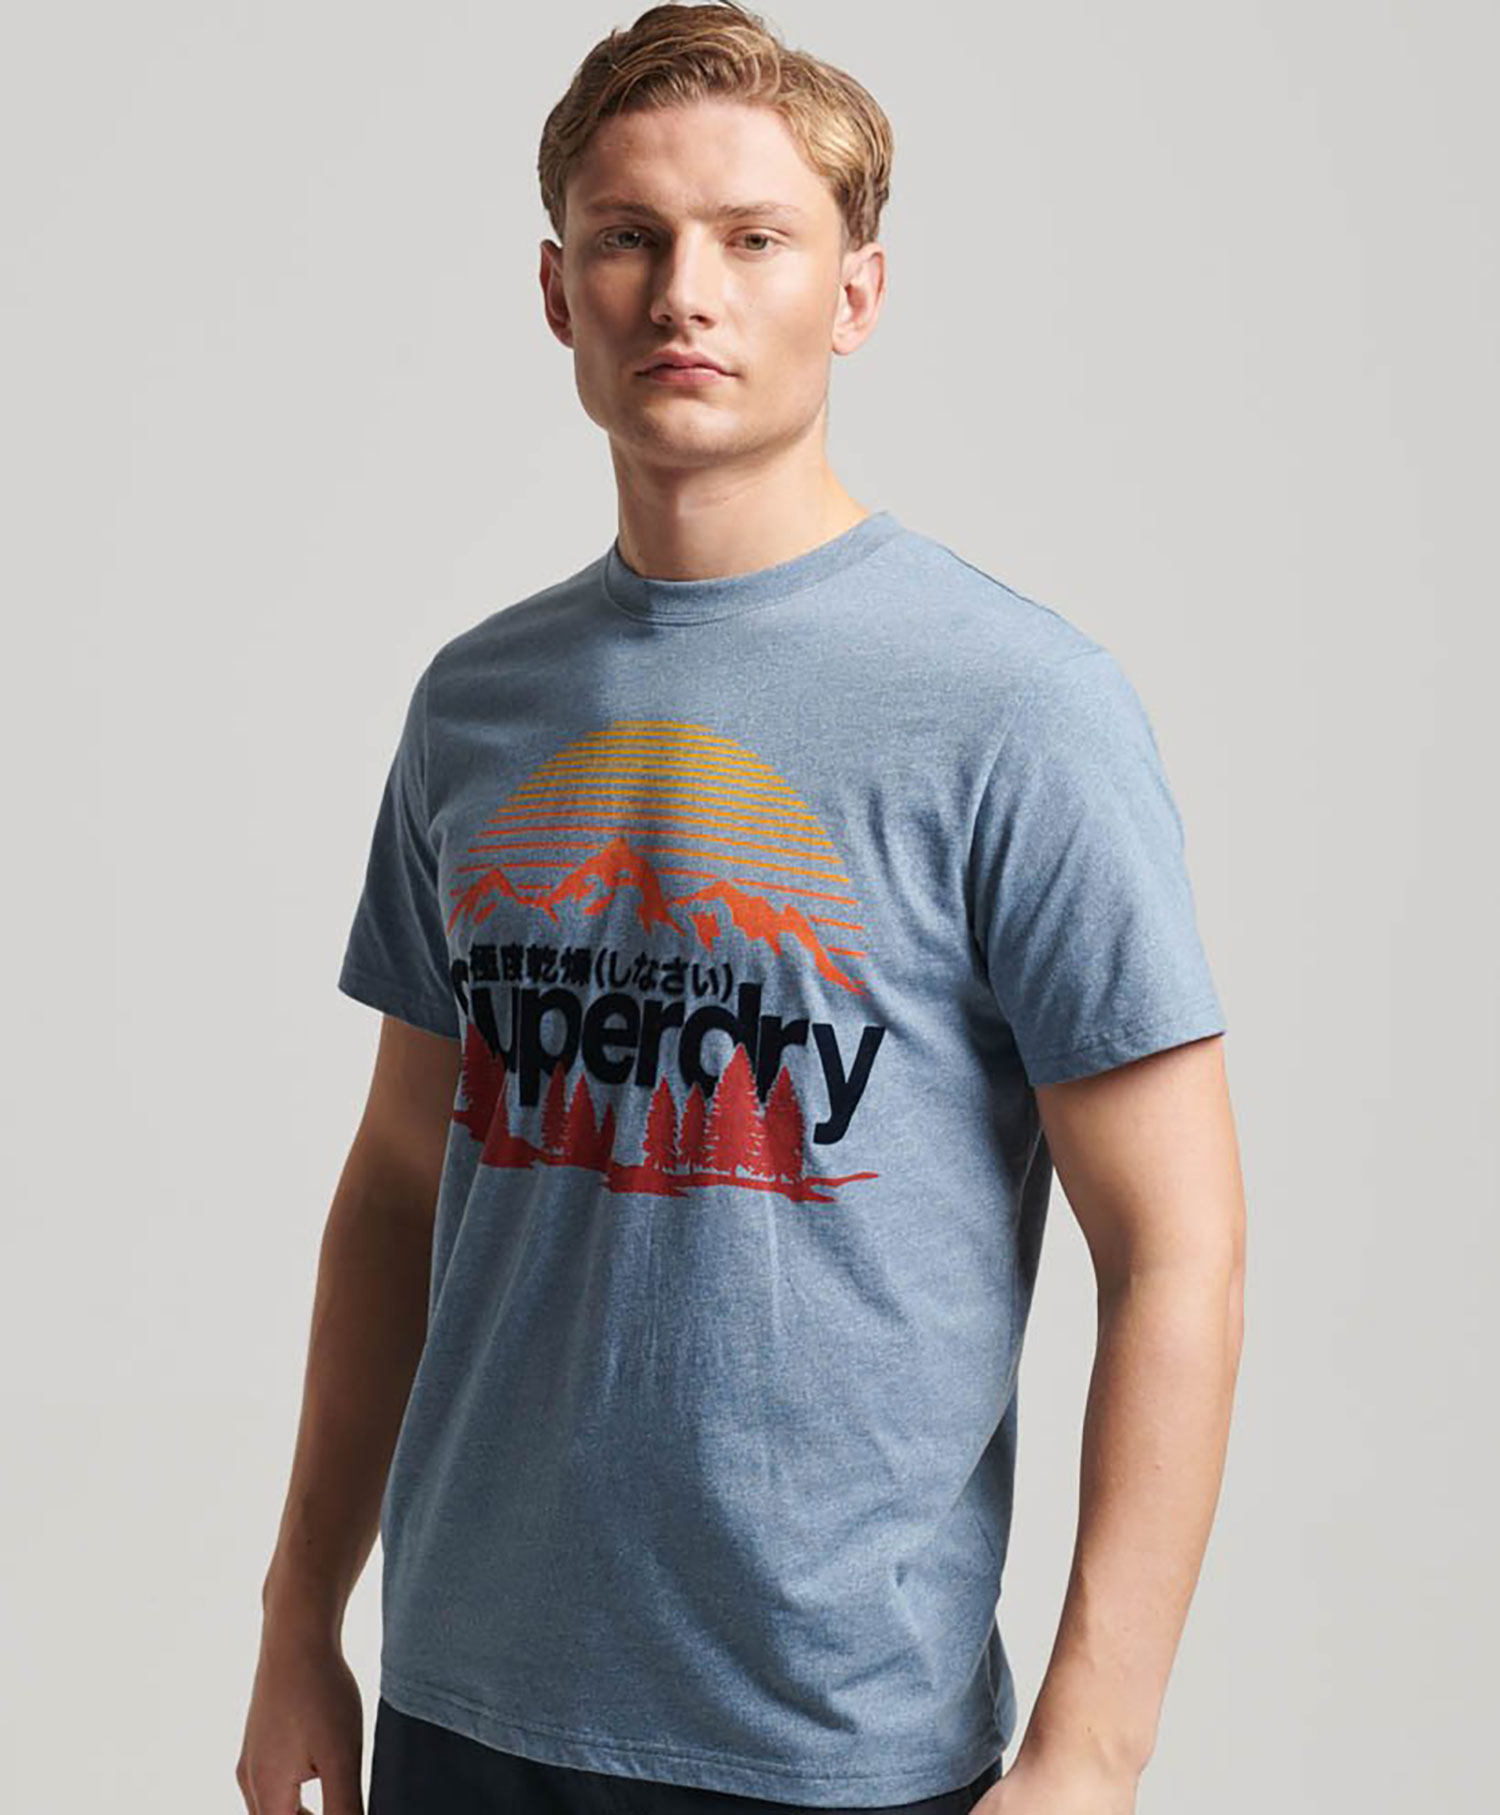 Superdry Core Logo T-shirt